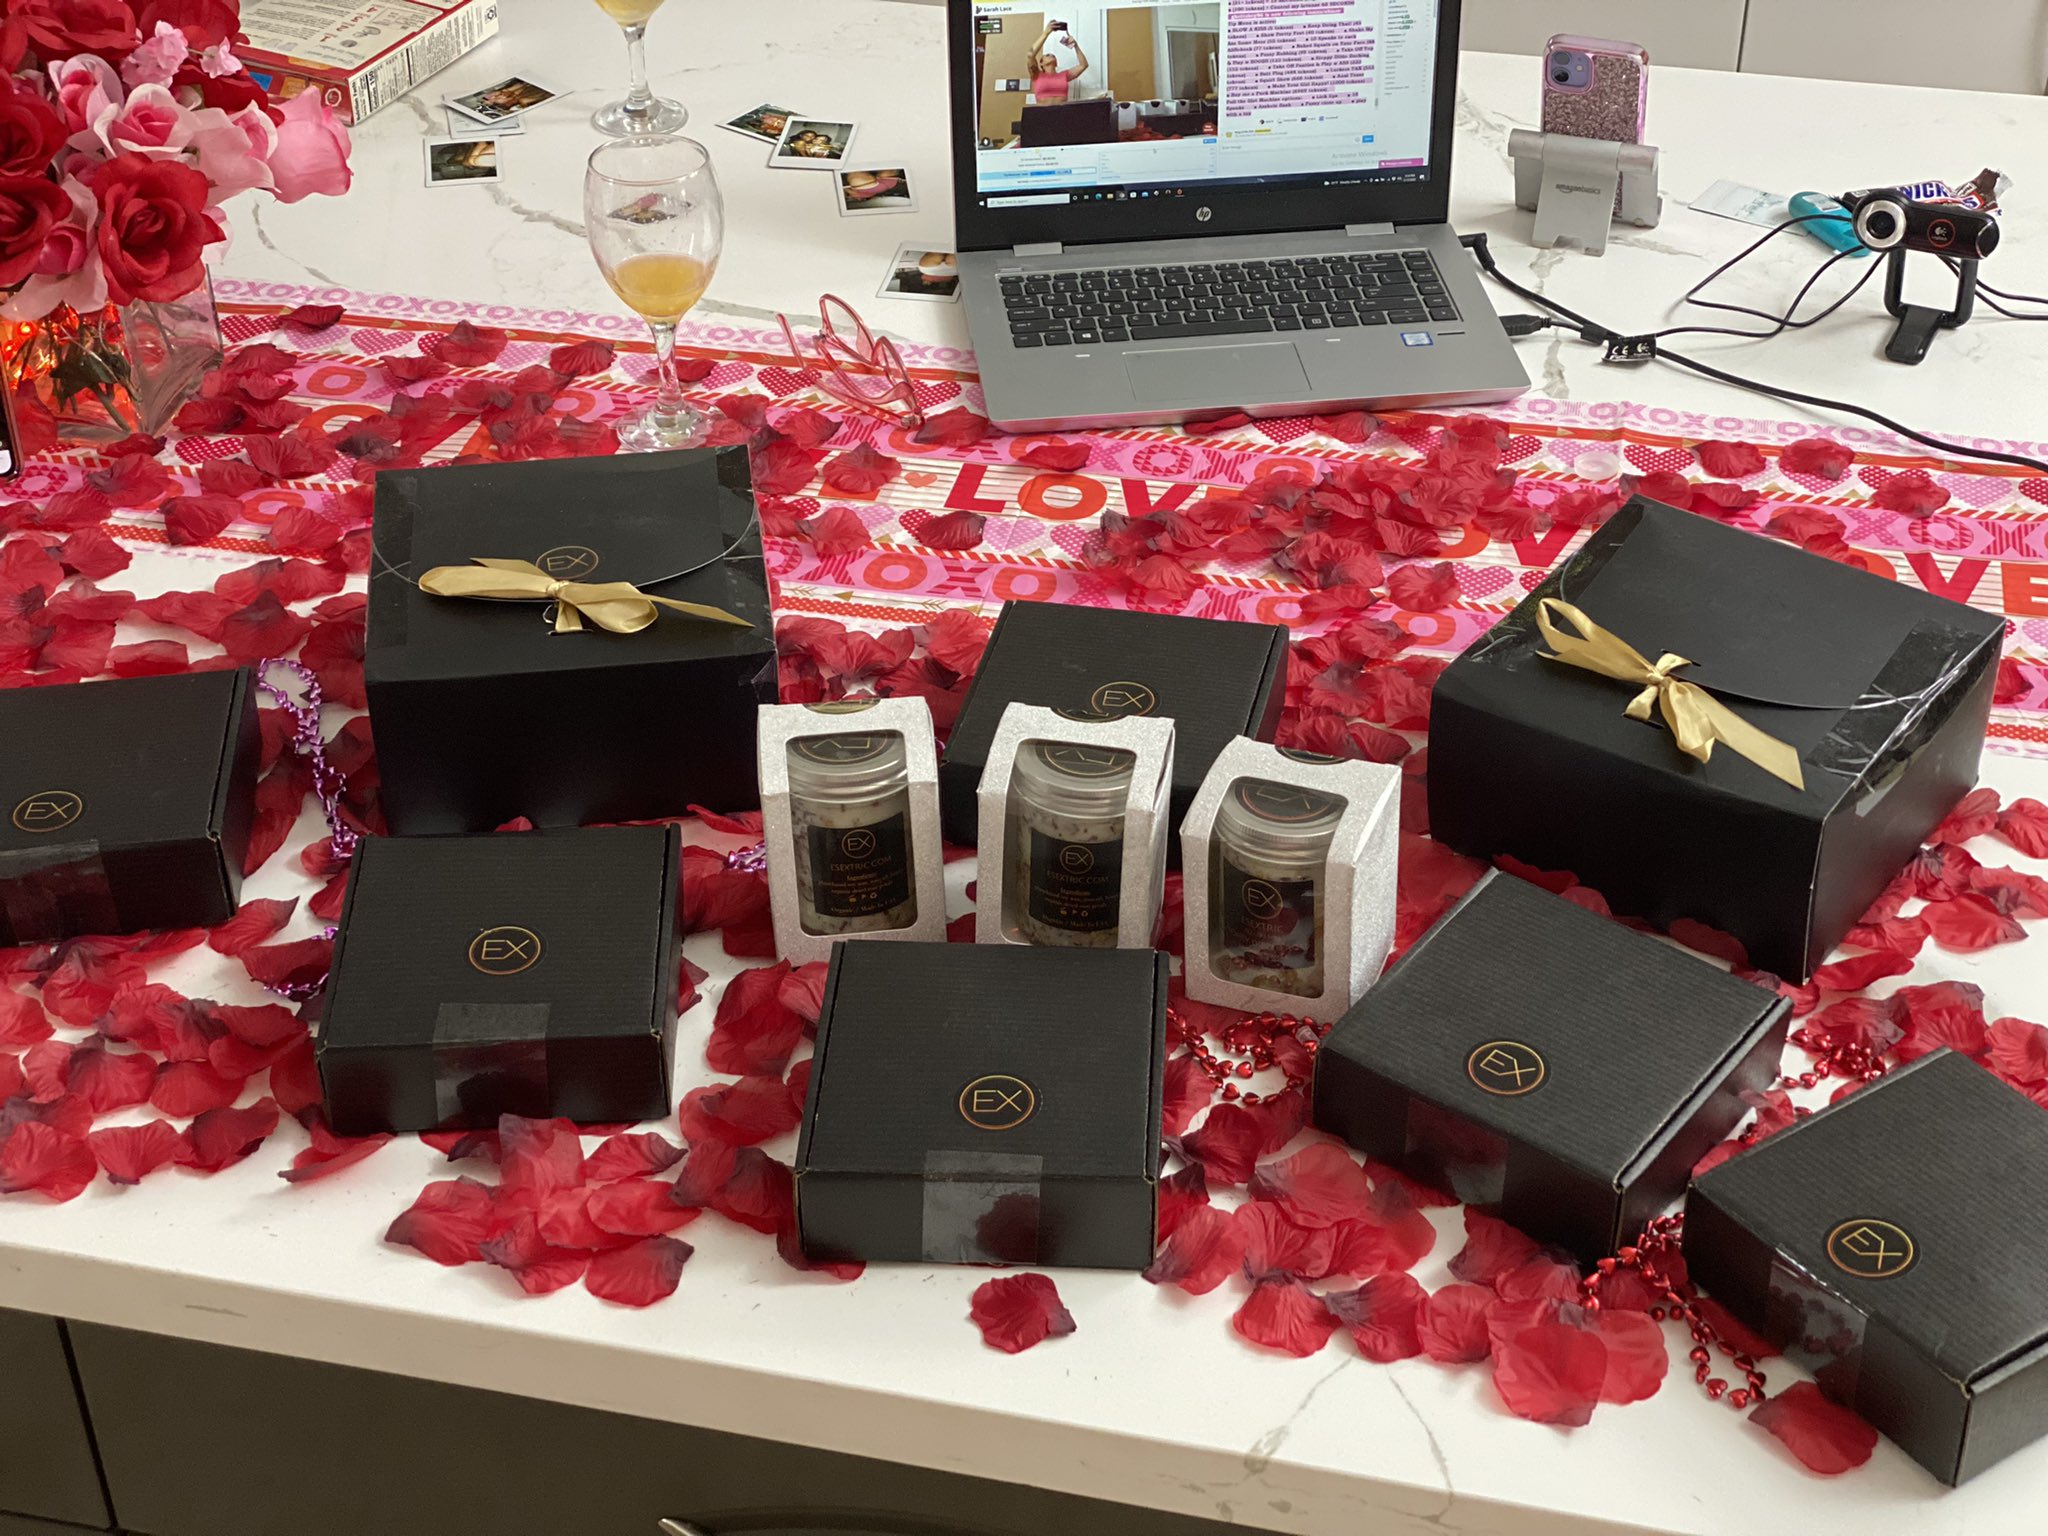 Valentine's Day Spa Gift Box